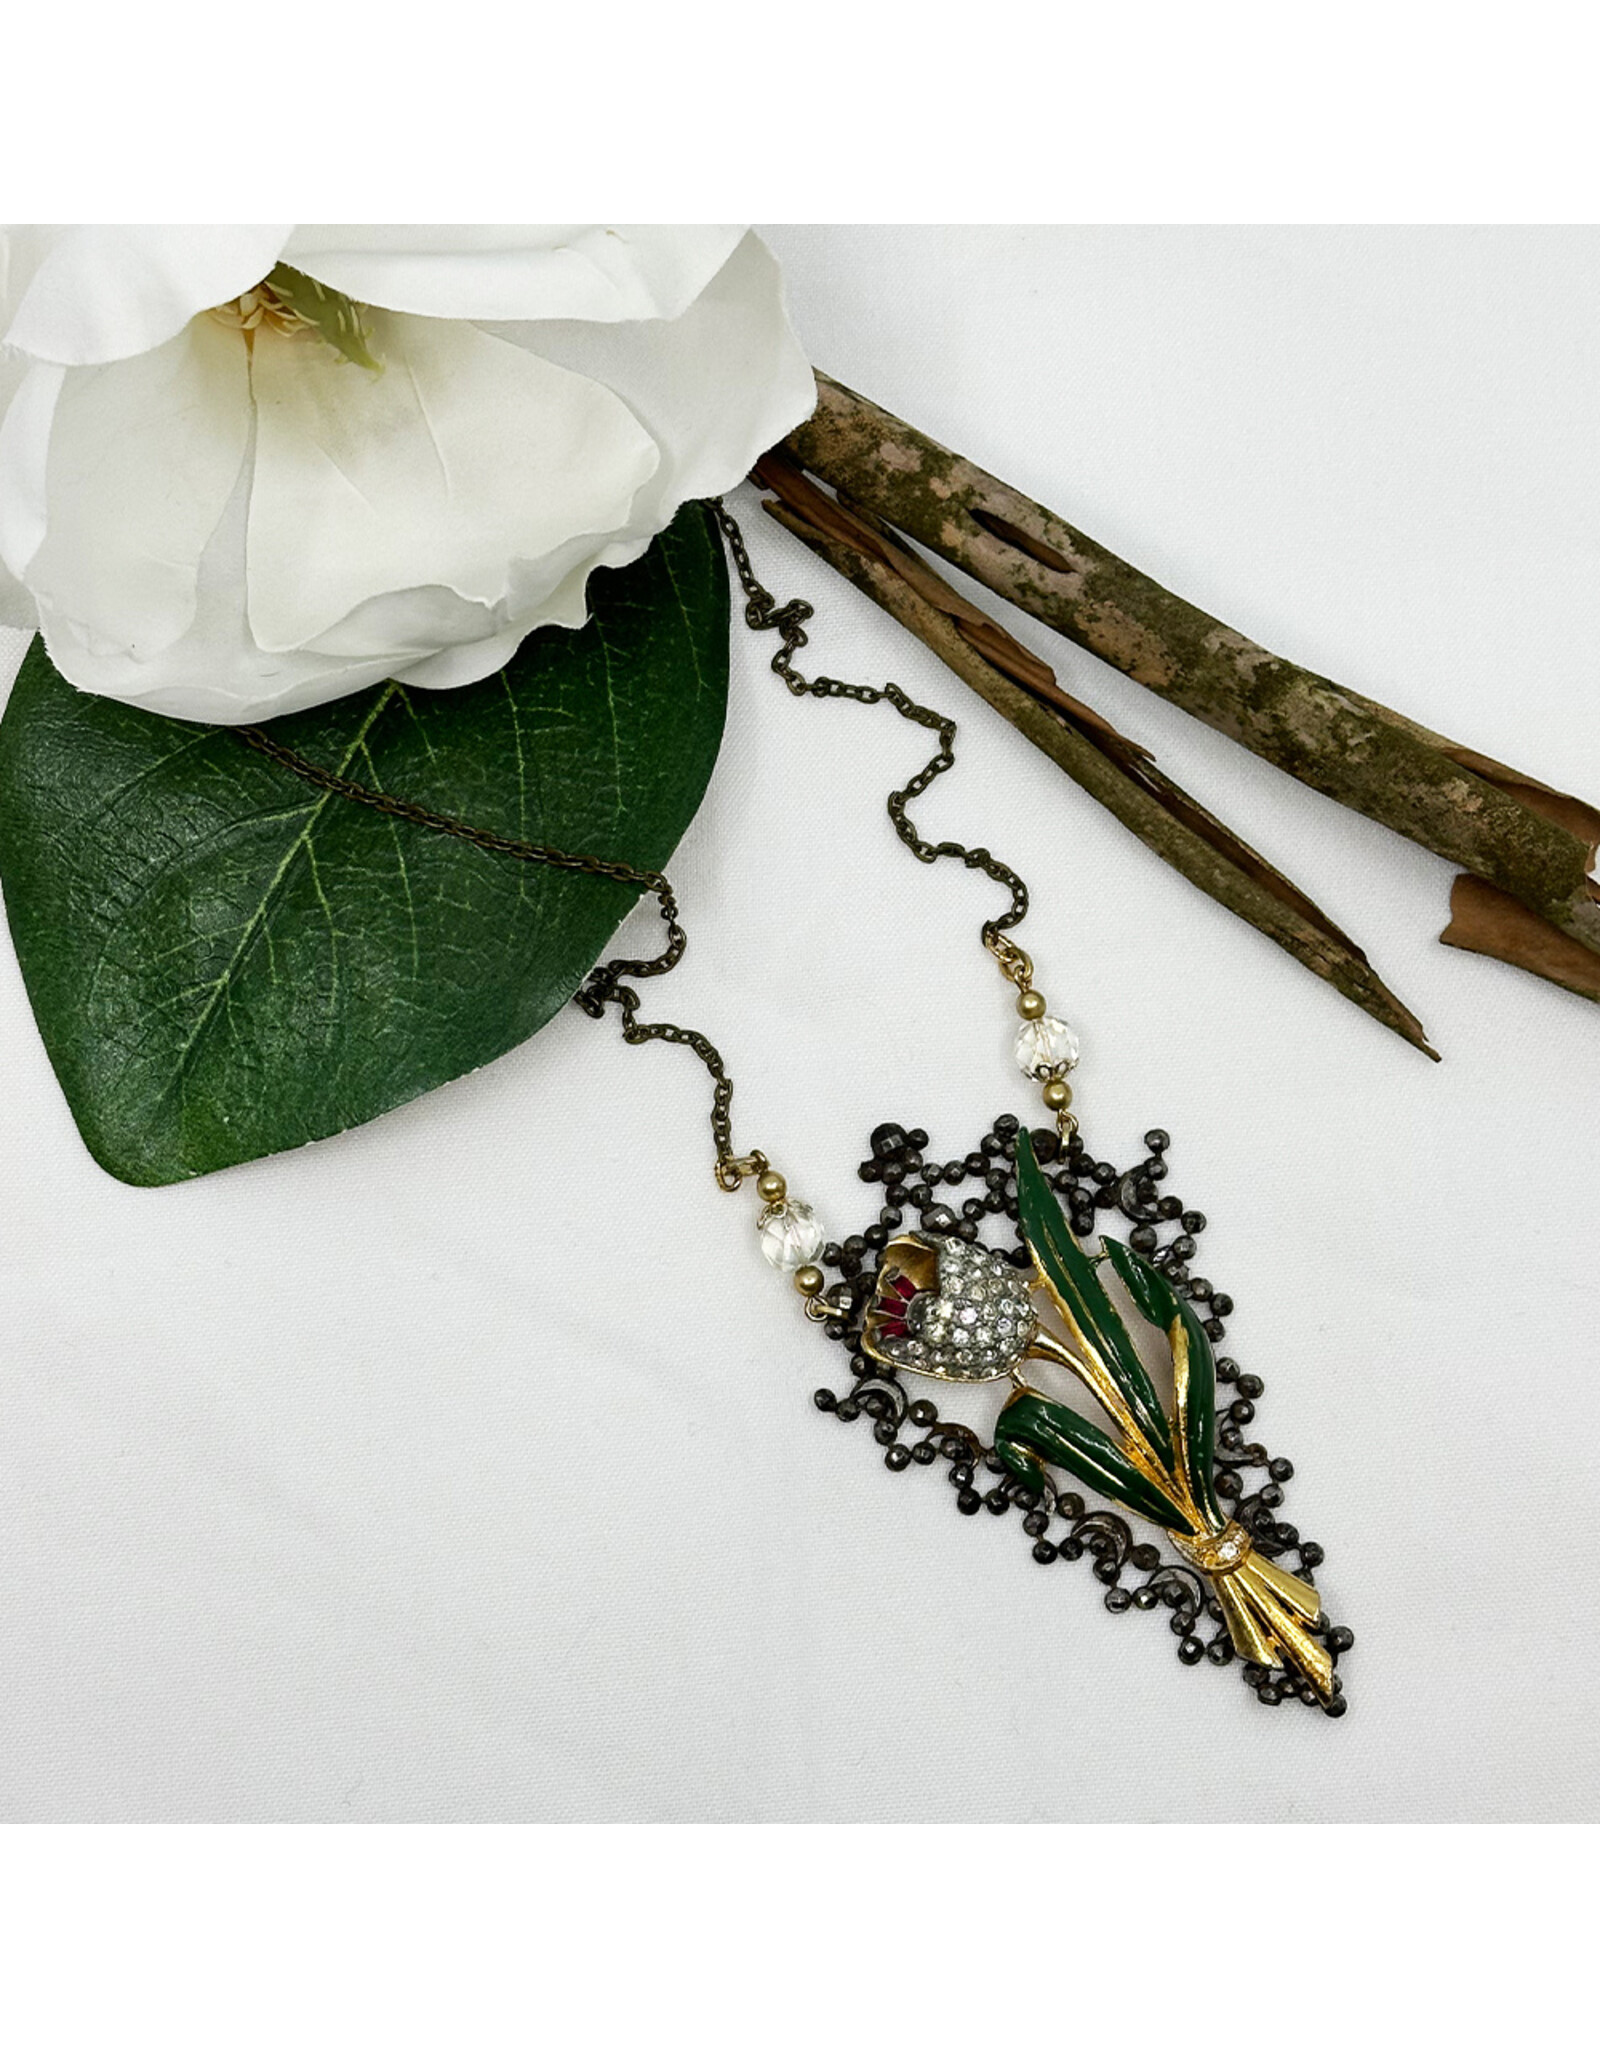 Vintage Floral Brooch and Buckle Necklace